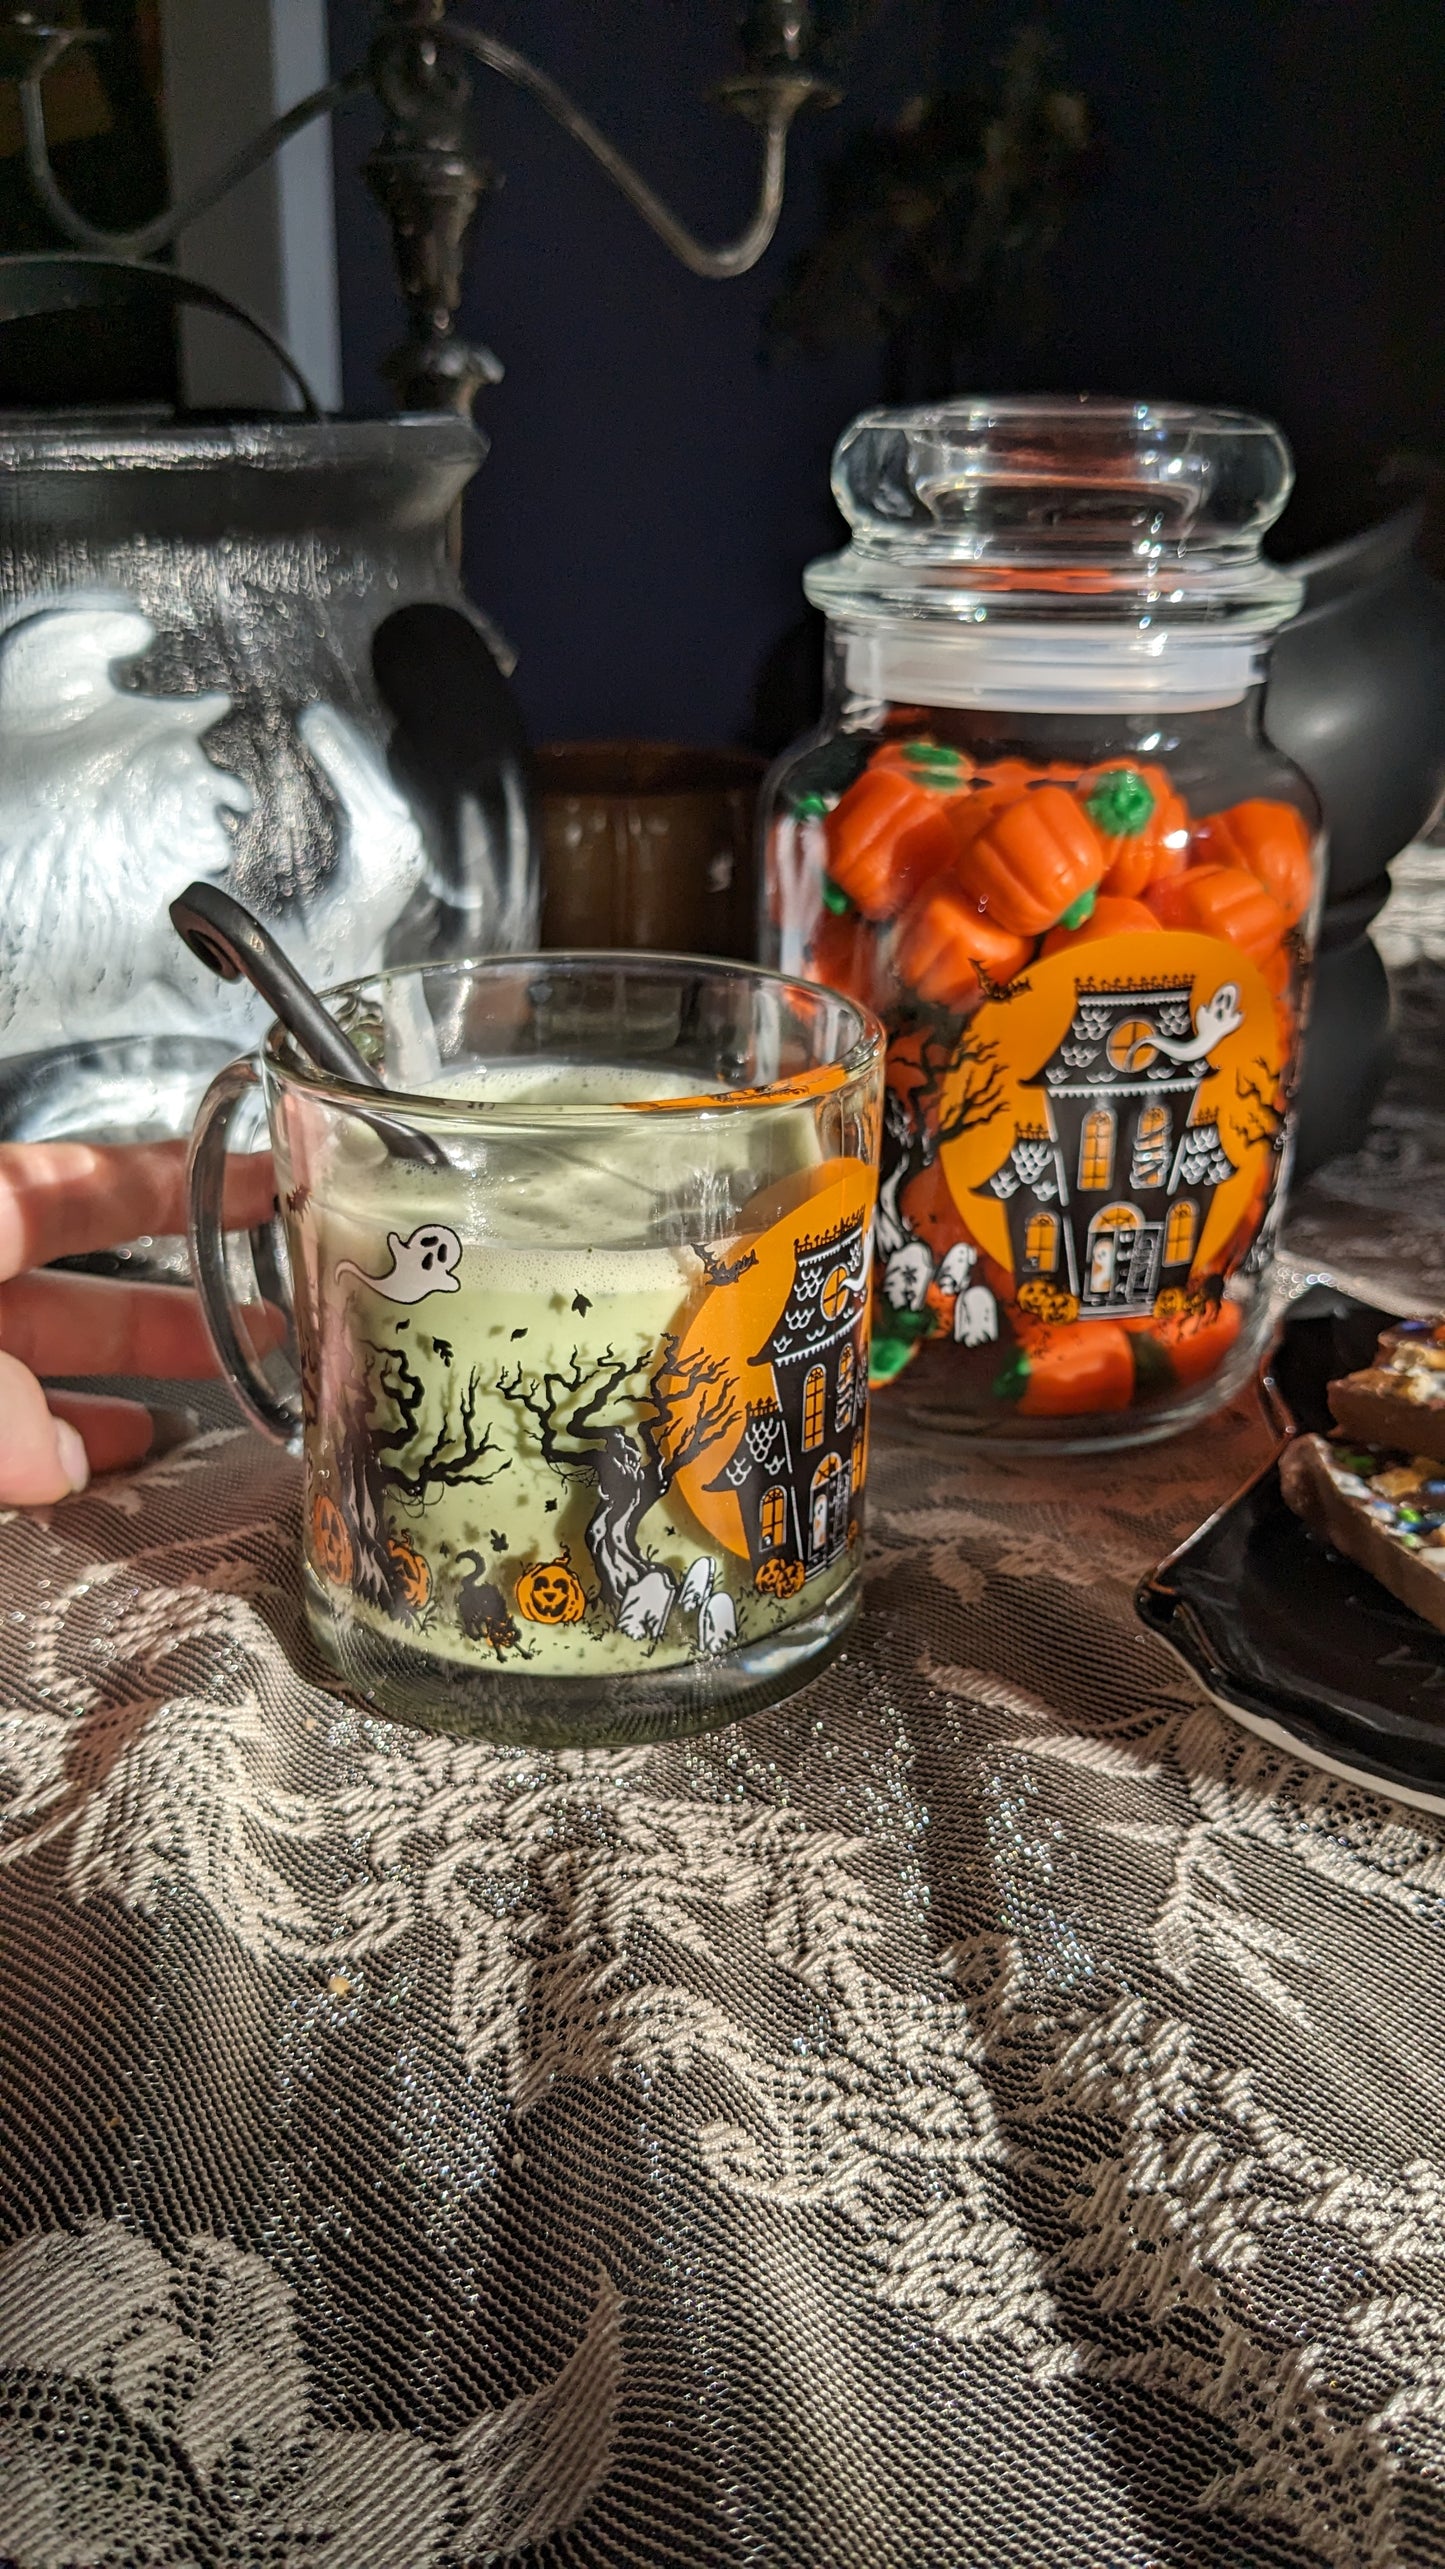 Ghostly Manor Vintage Inspired Mug